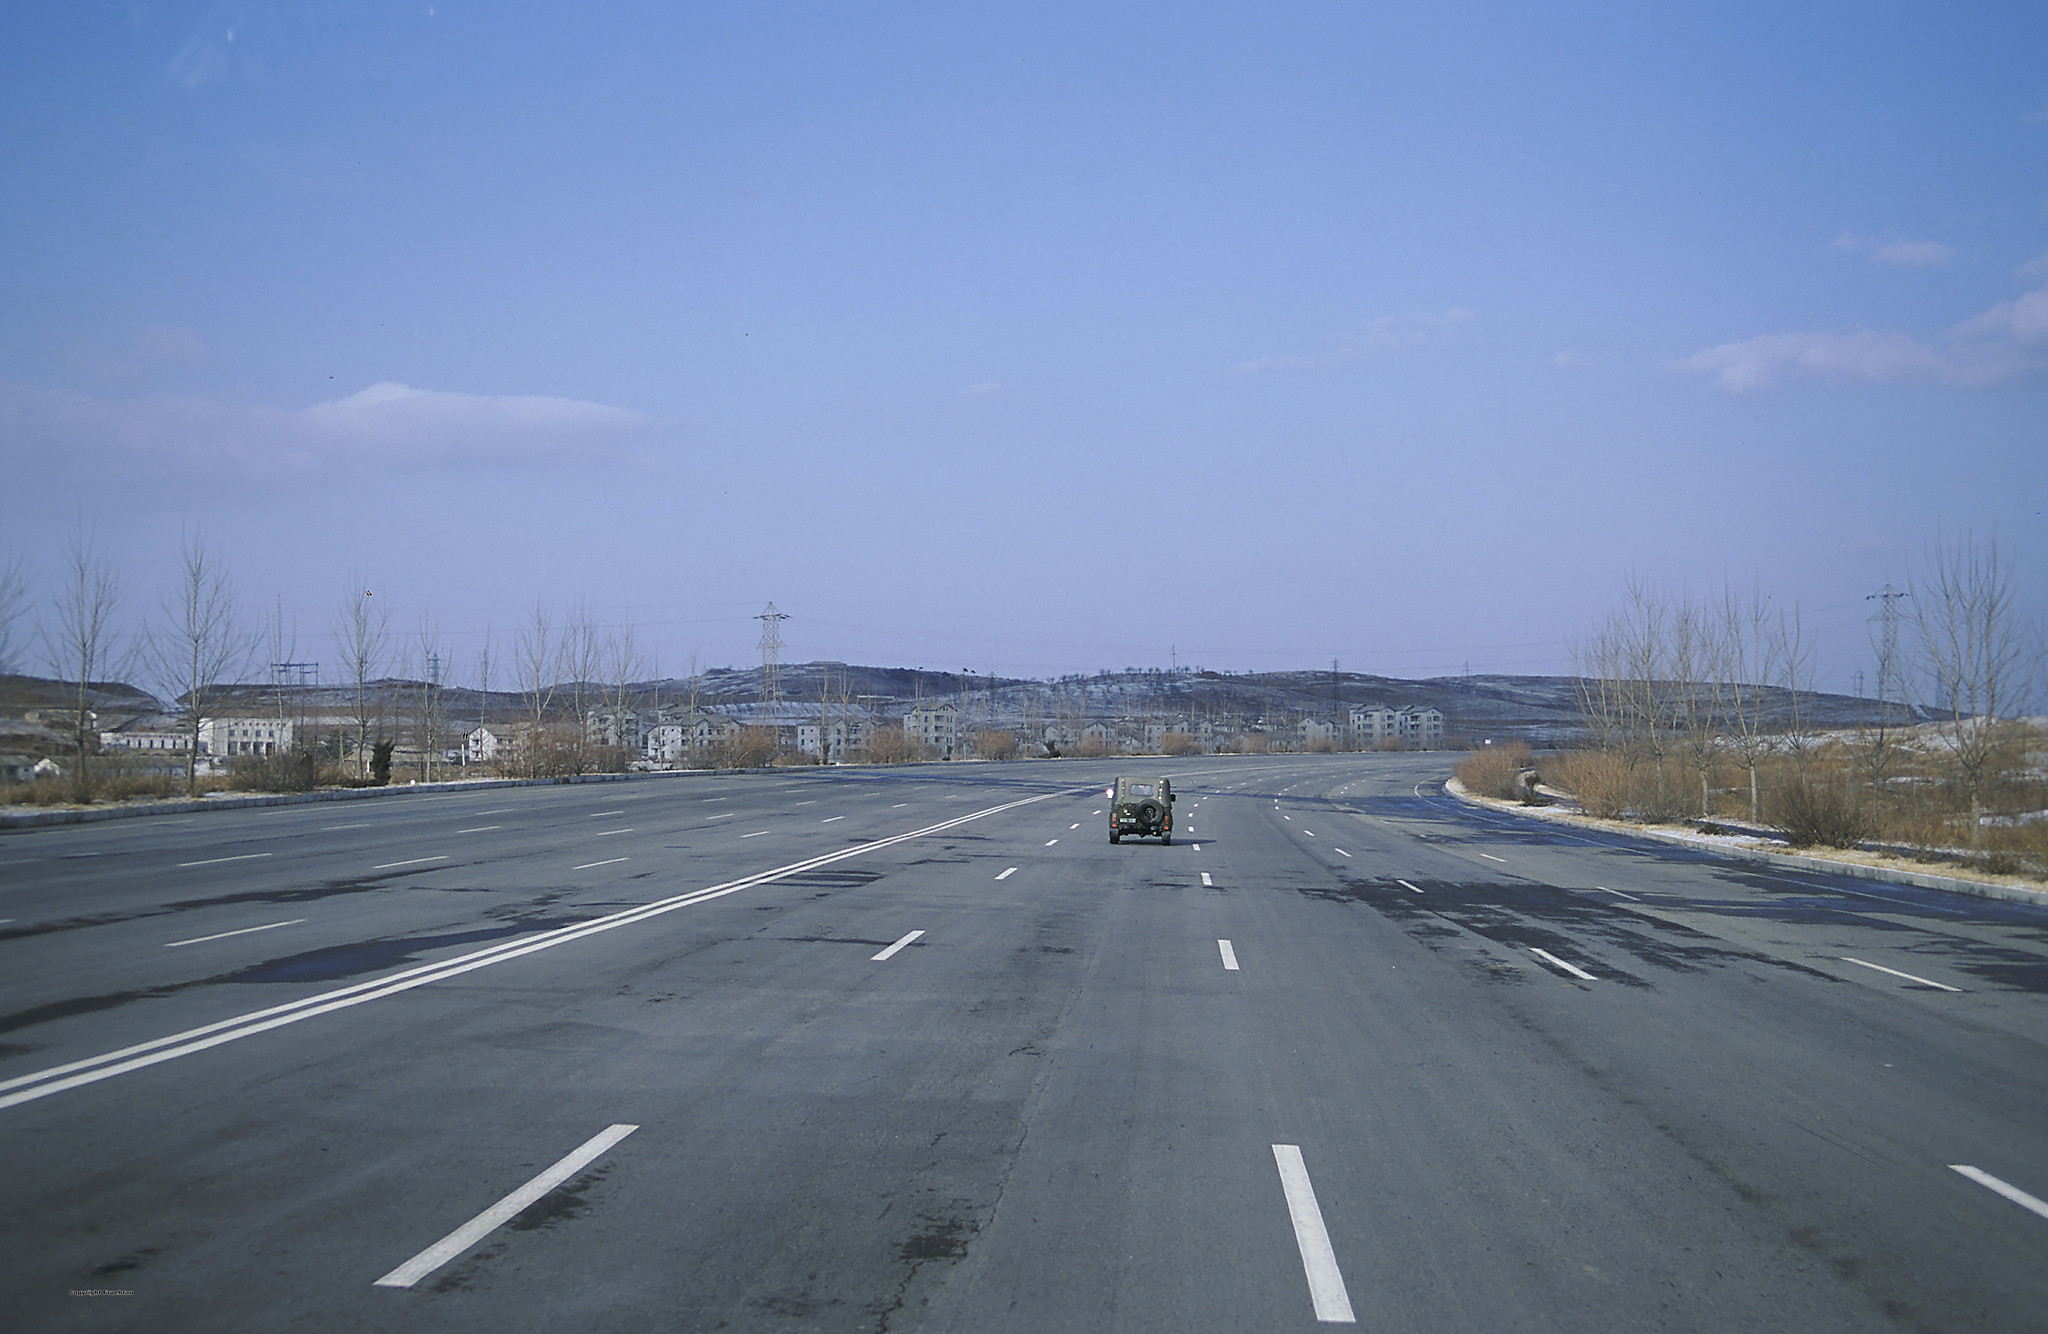 The empty highways of North Korea